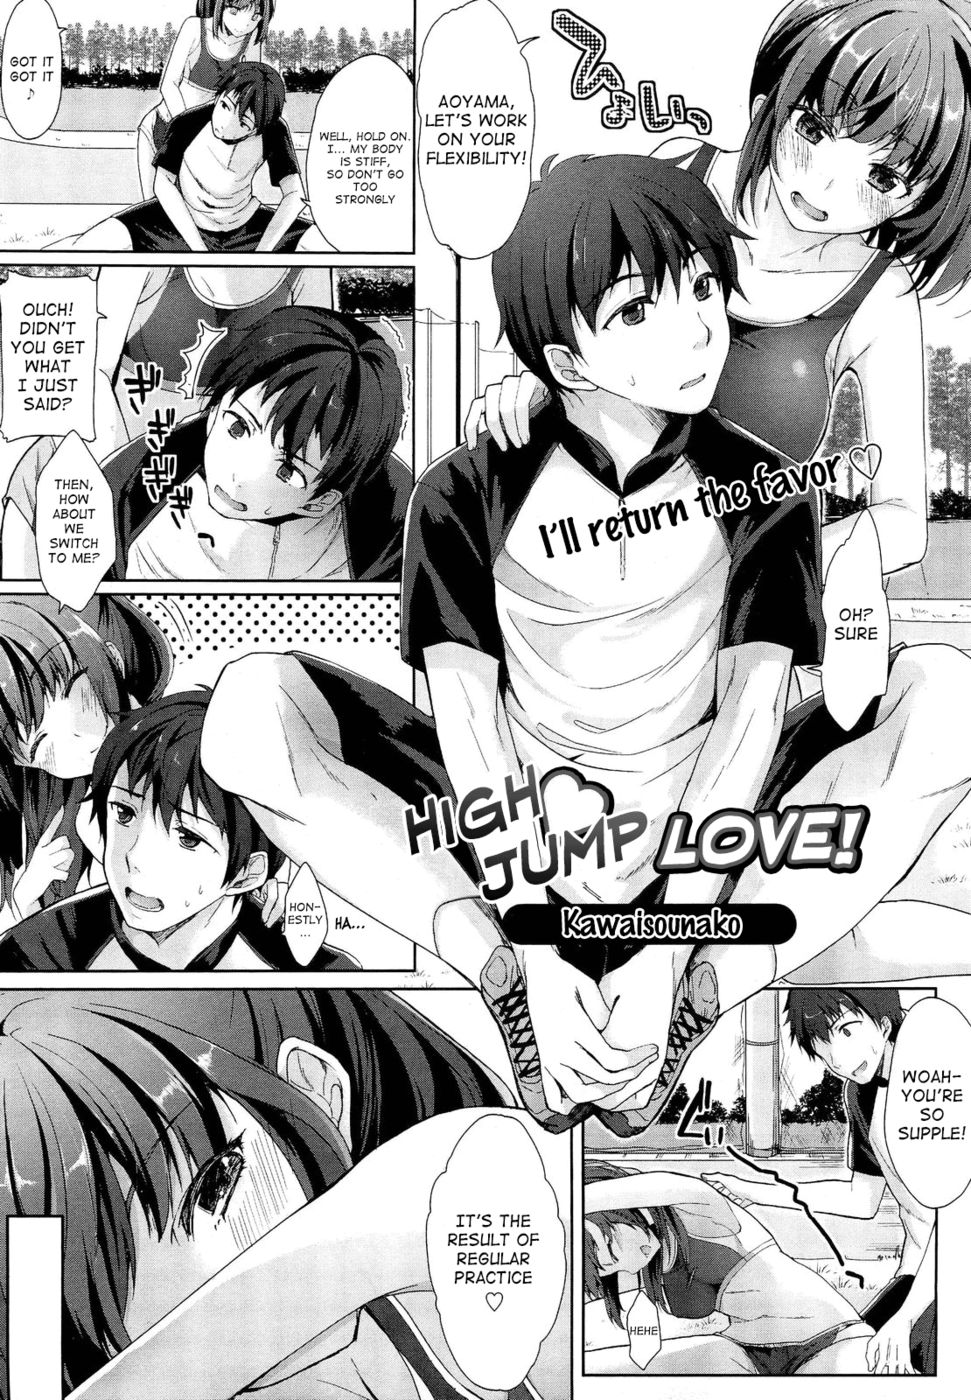 Hentai Manga Comic-High Jump Love-Read-1